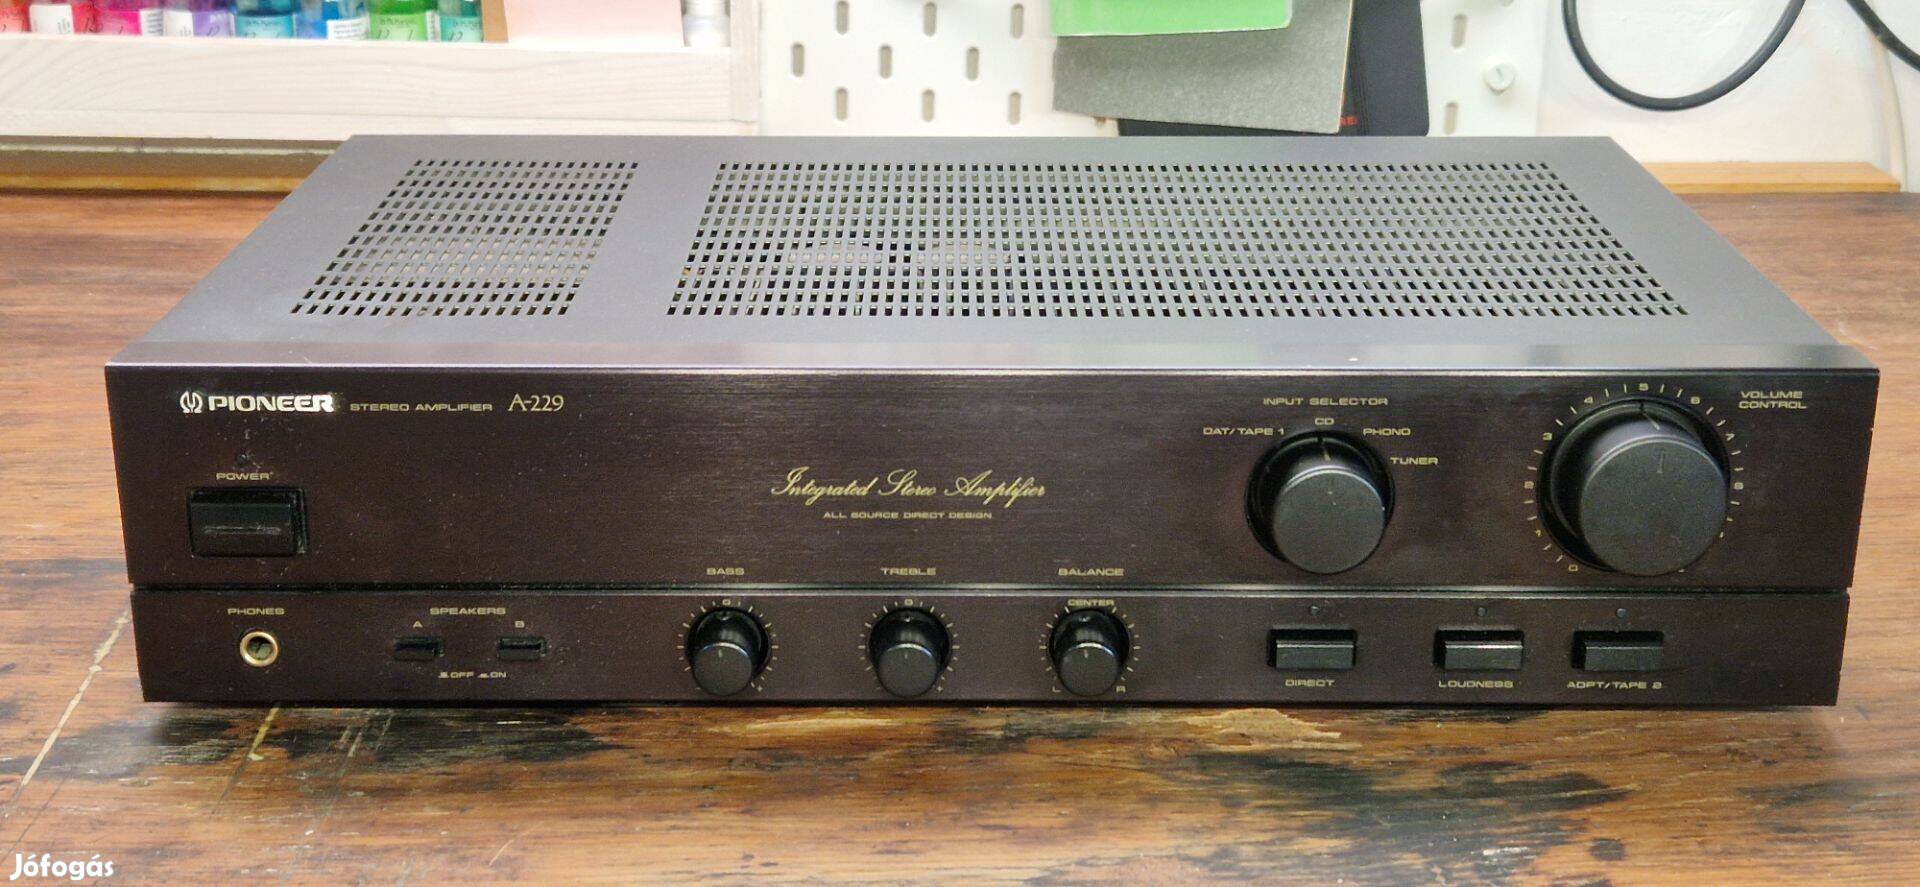 Eladó Pioneer A-229 stereo erősítő 2 x 35w 8ohm (1991.)